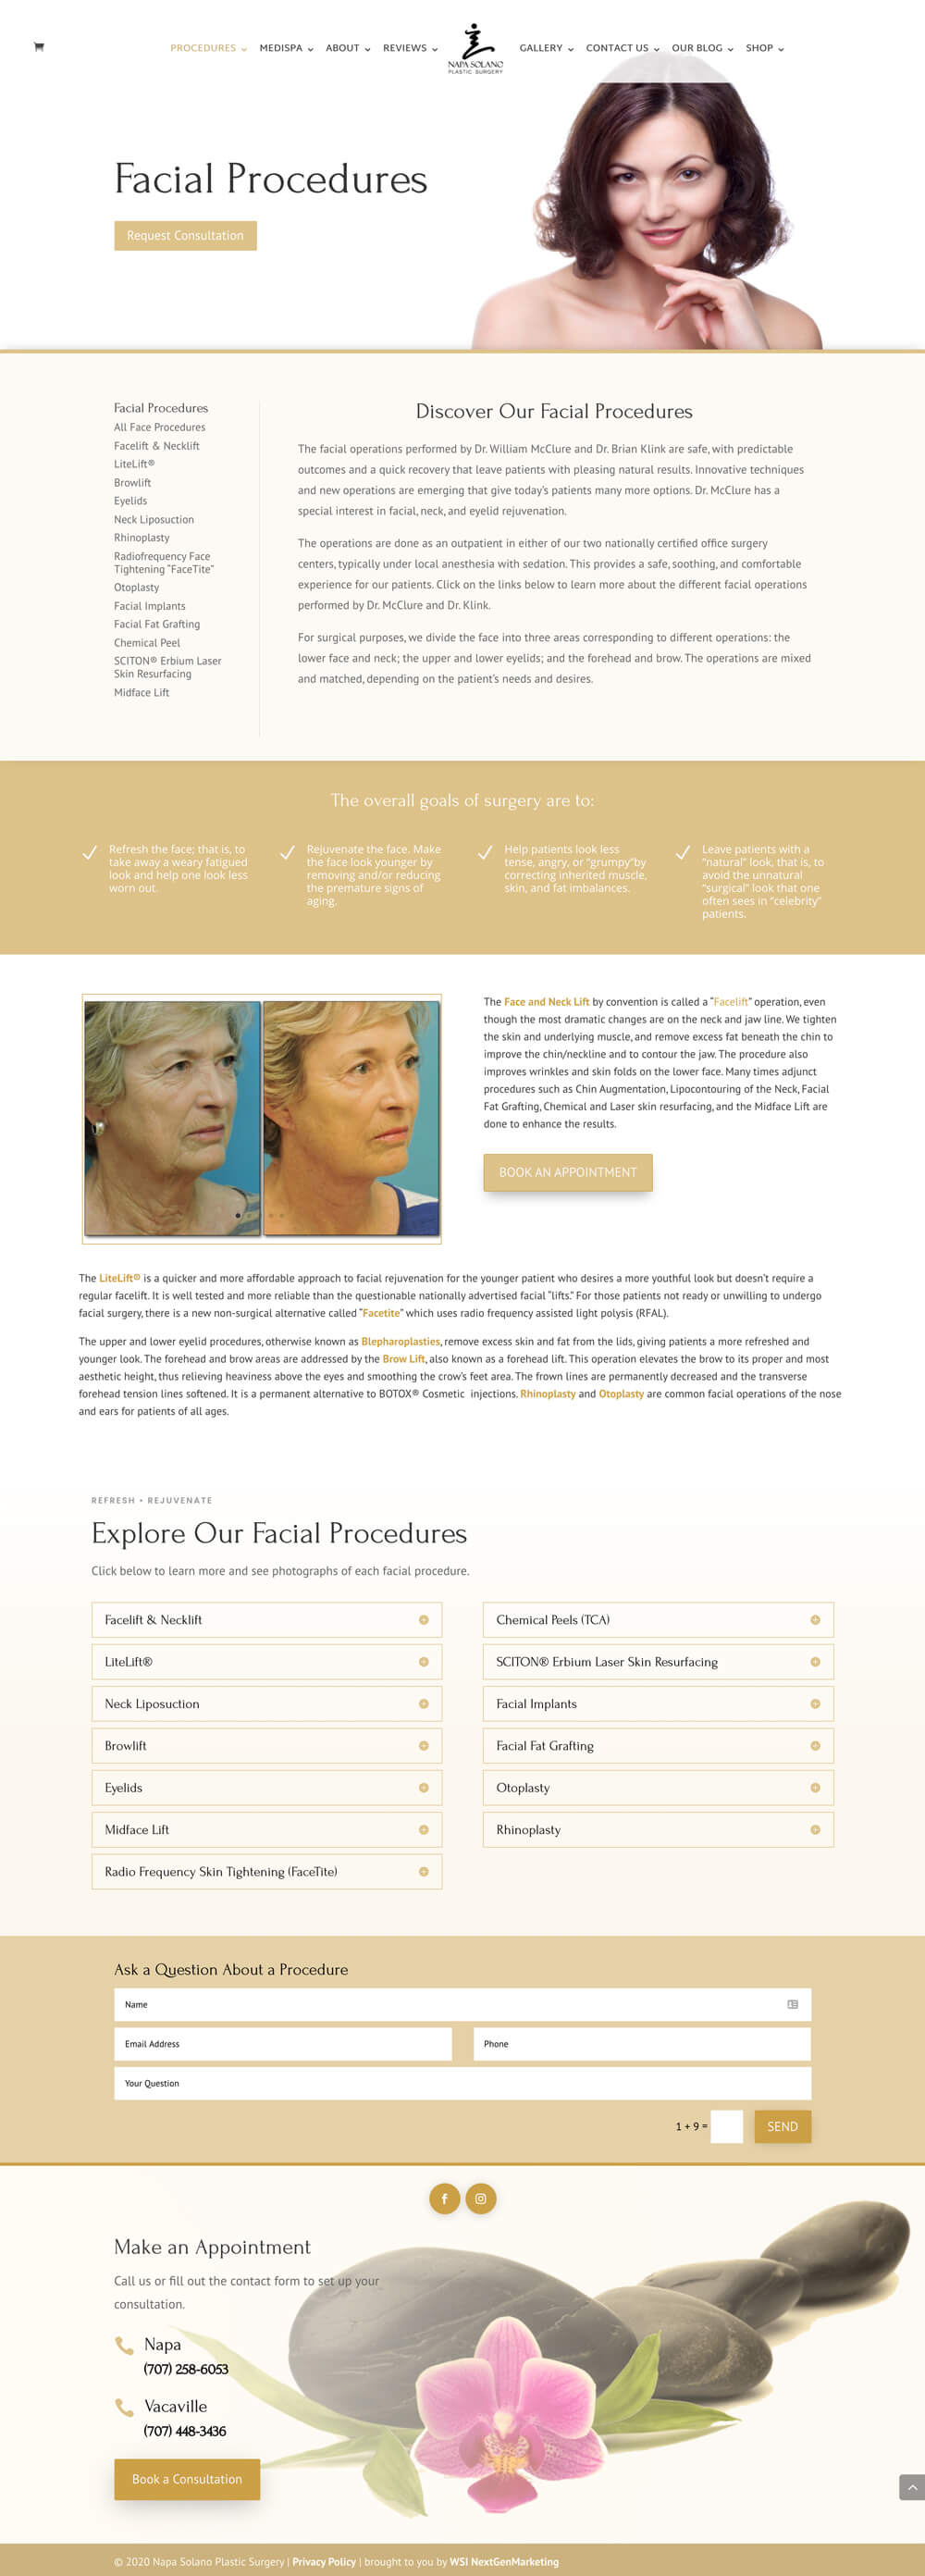 NS-plastic-surgery-website-face-page